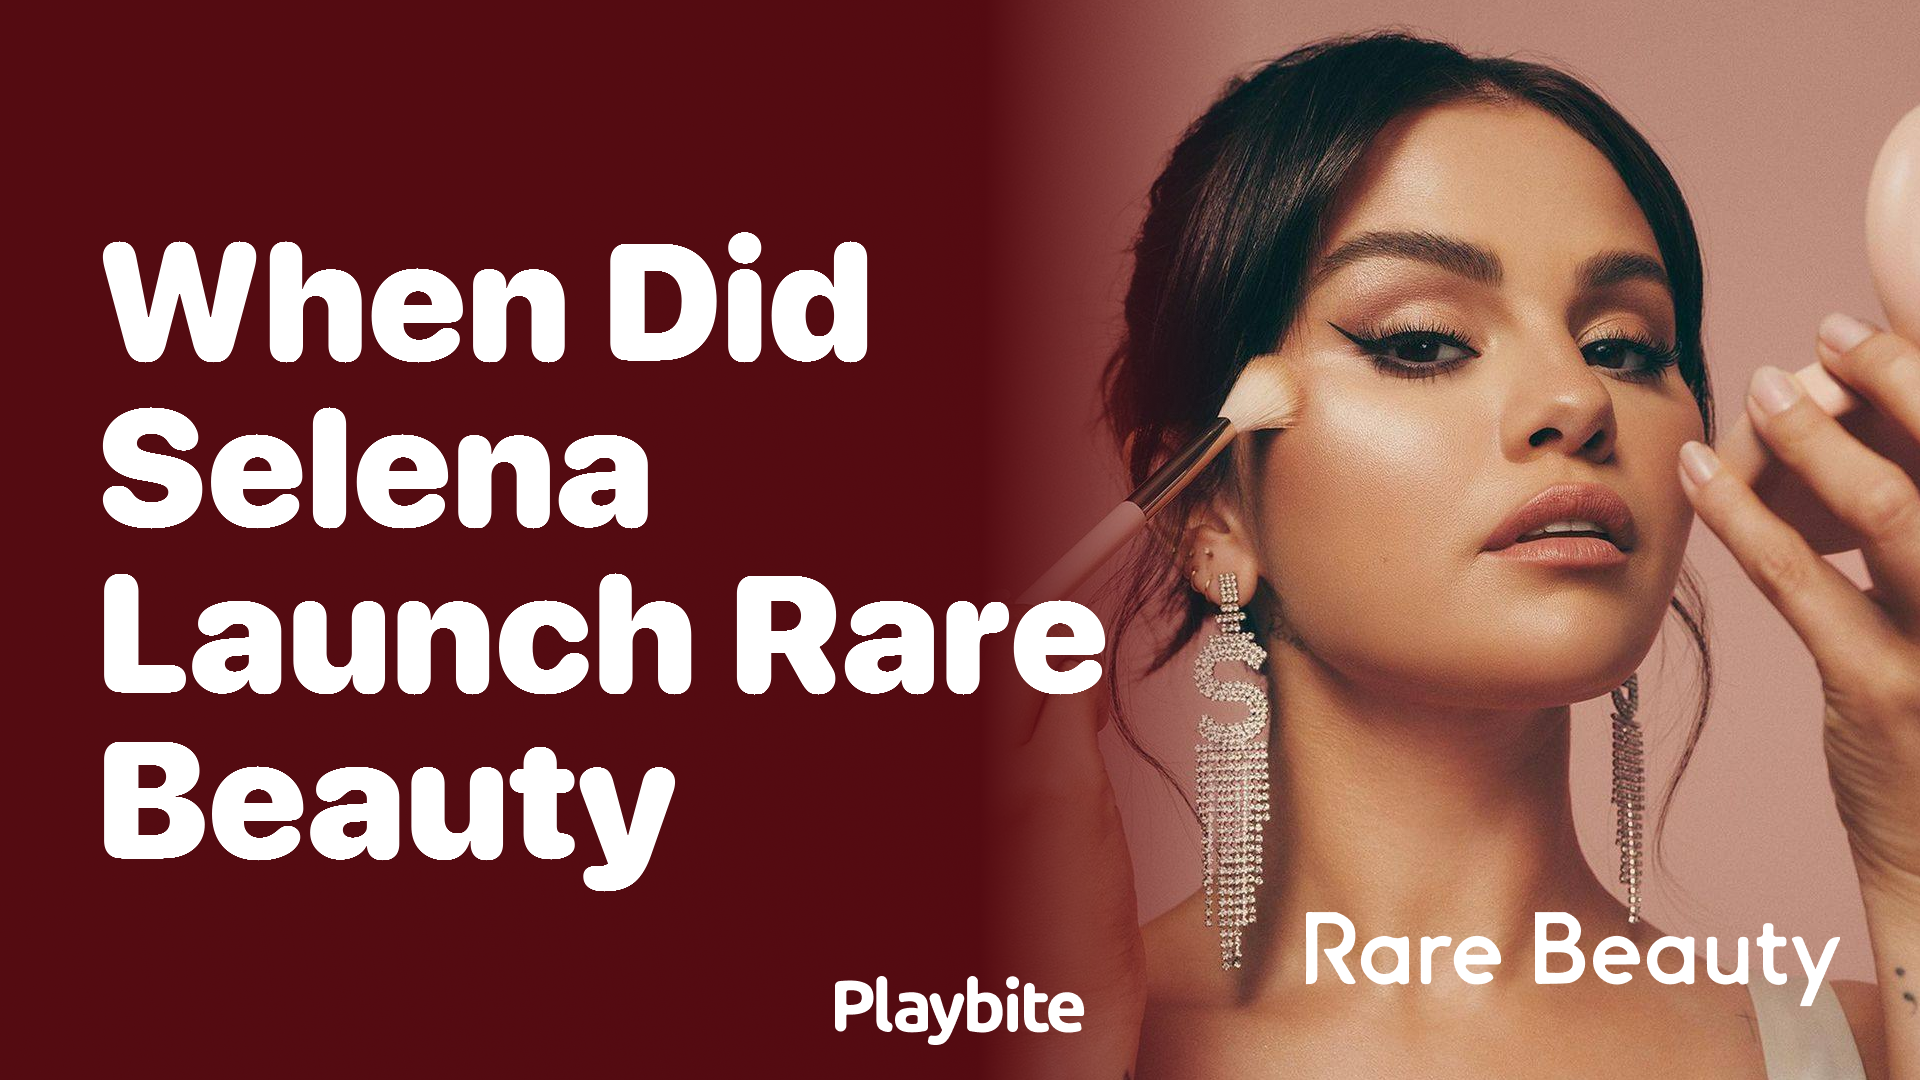 Selena Gomez's Rare Beauty Launches